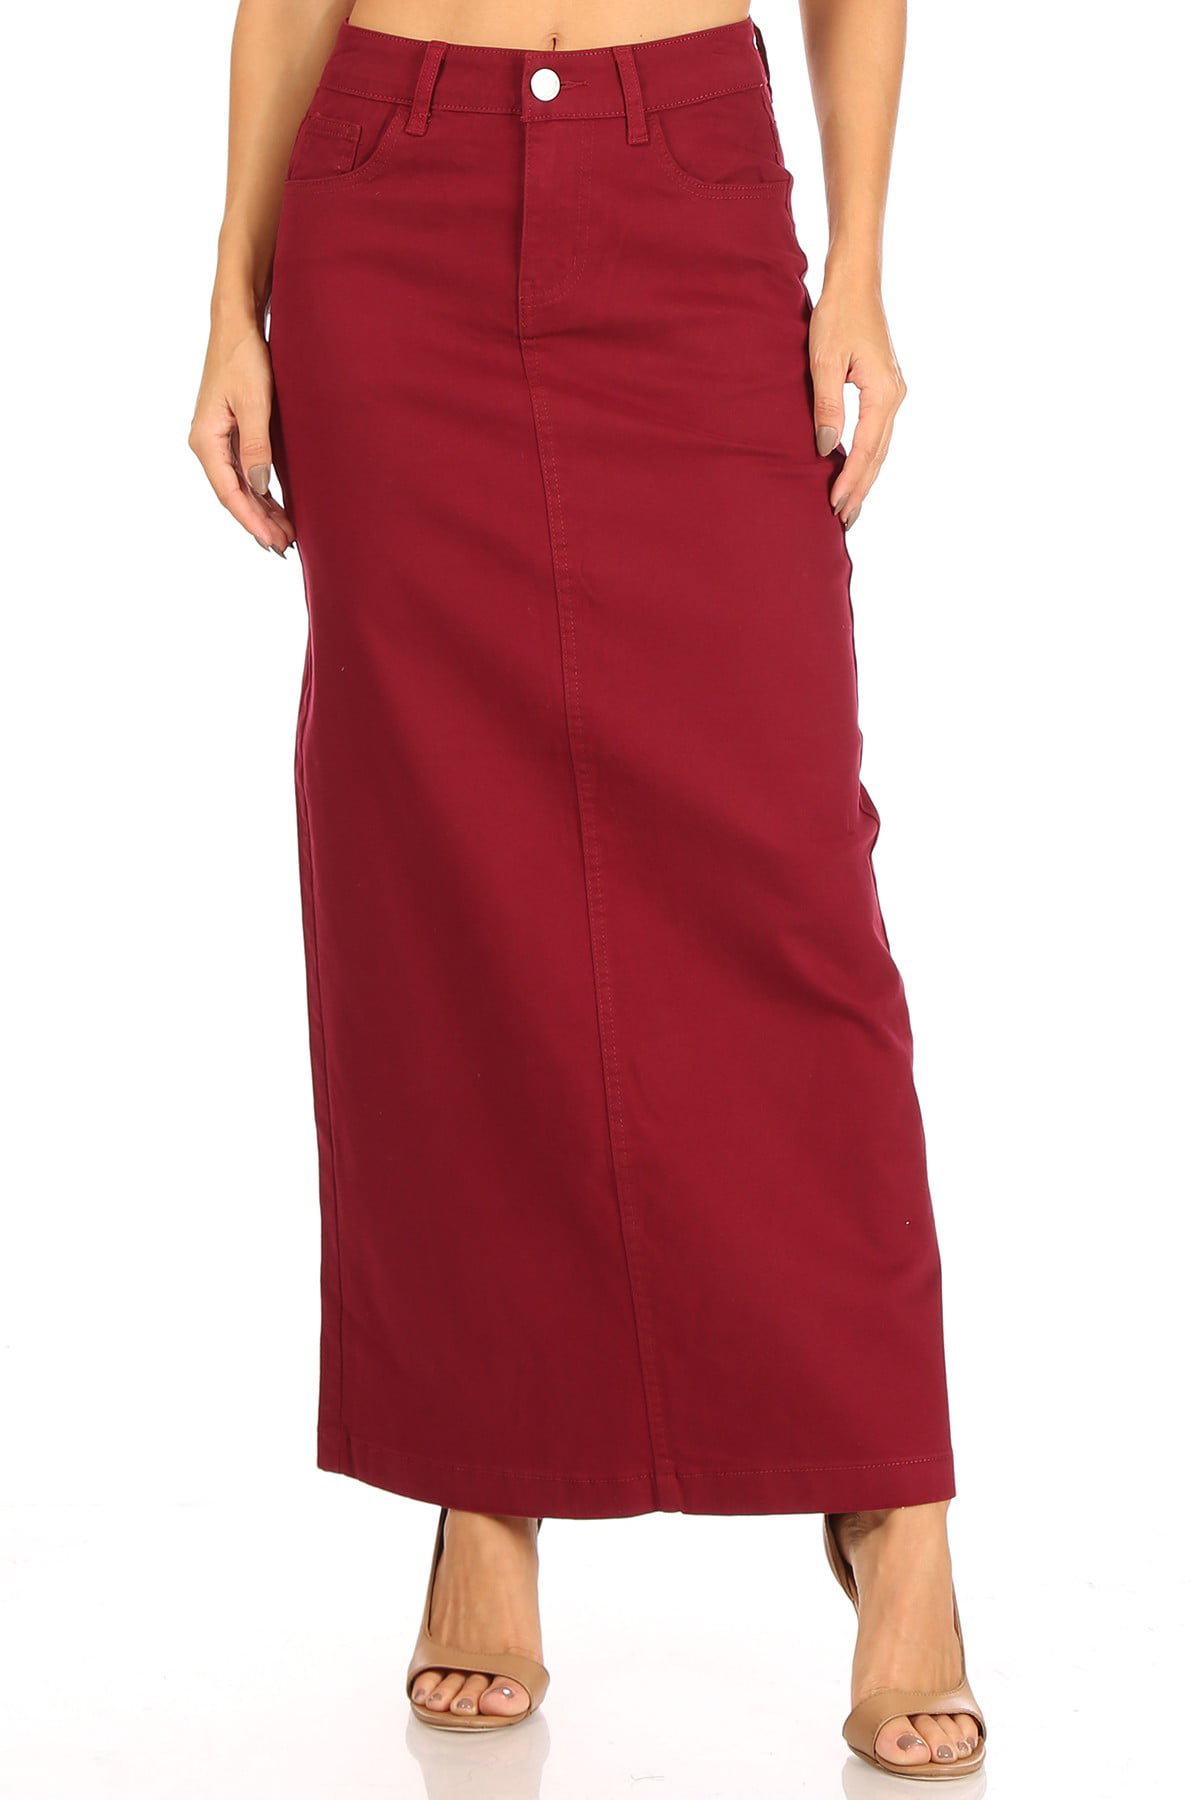 Women's Juniors/Plus Size Long Pencil Stretch Twill Skirt